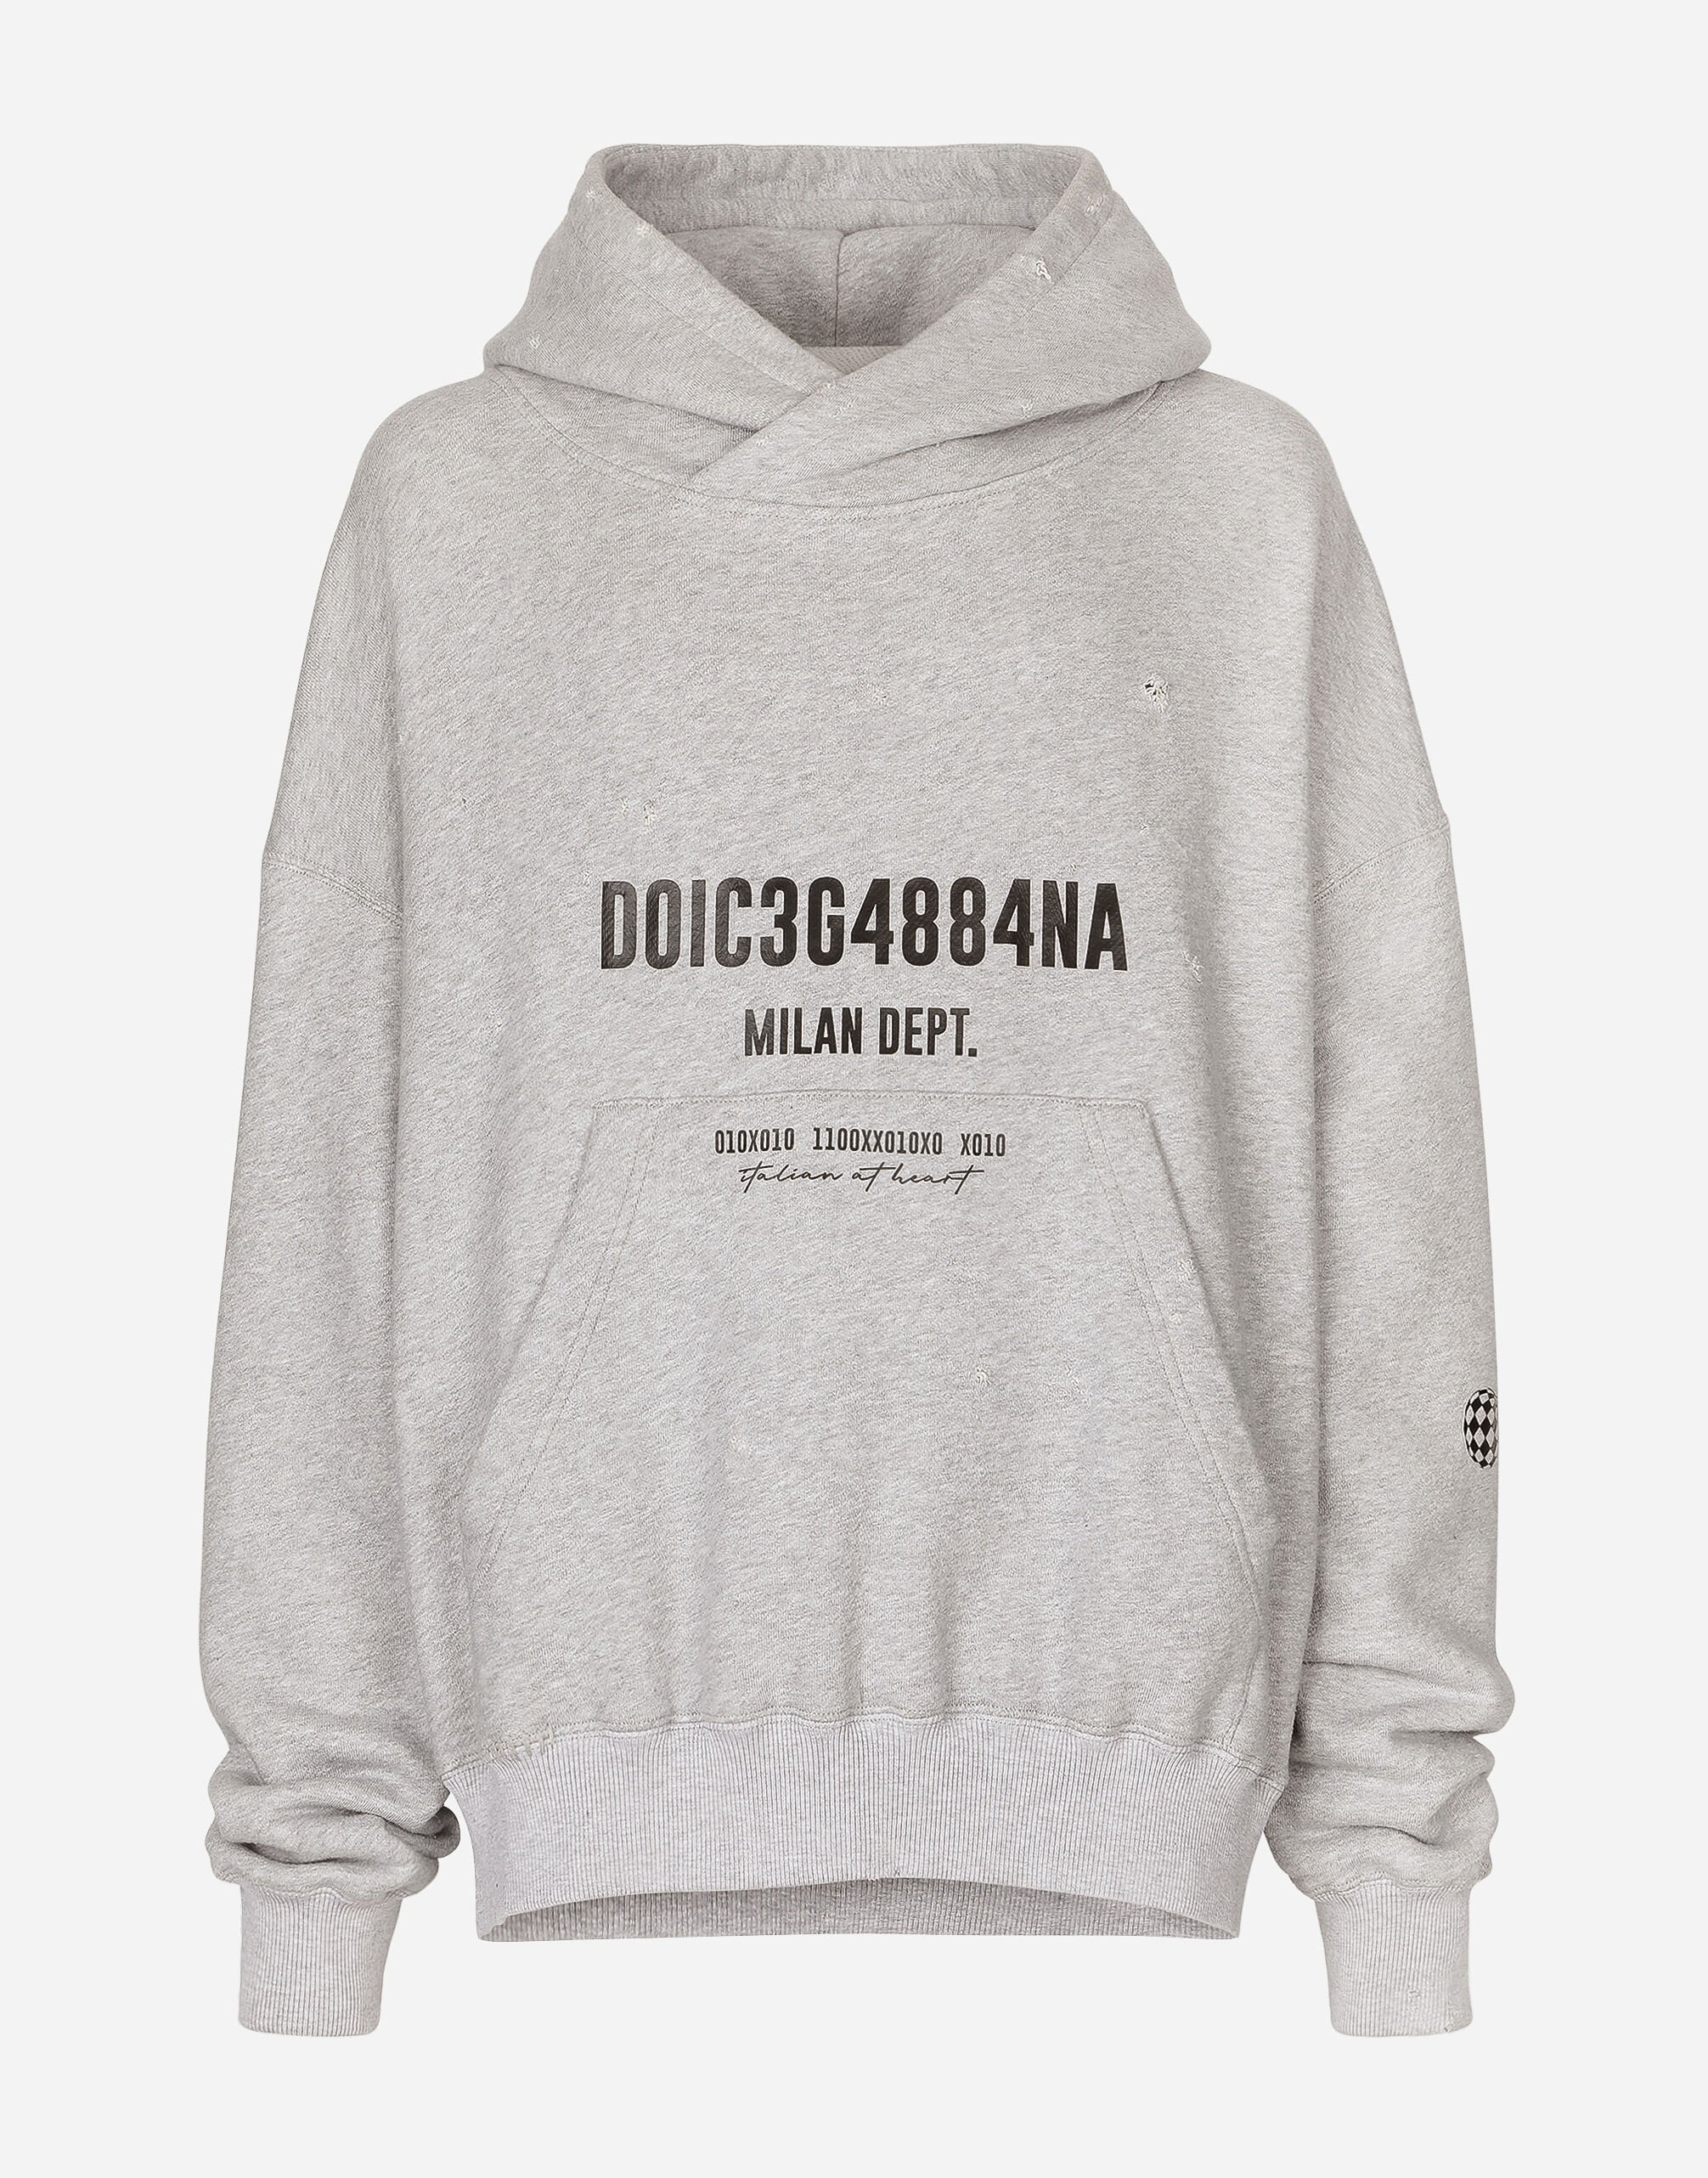 Dolce&Gabbana スウェットパーカ ジャージー ロゴプリント ブラック BM2123AQ437